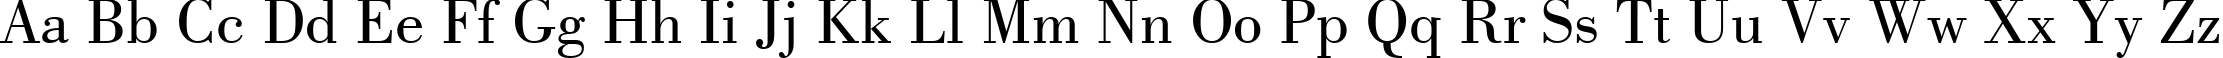 Пример написания английского алфавита шрифтом Bodoni Book BT